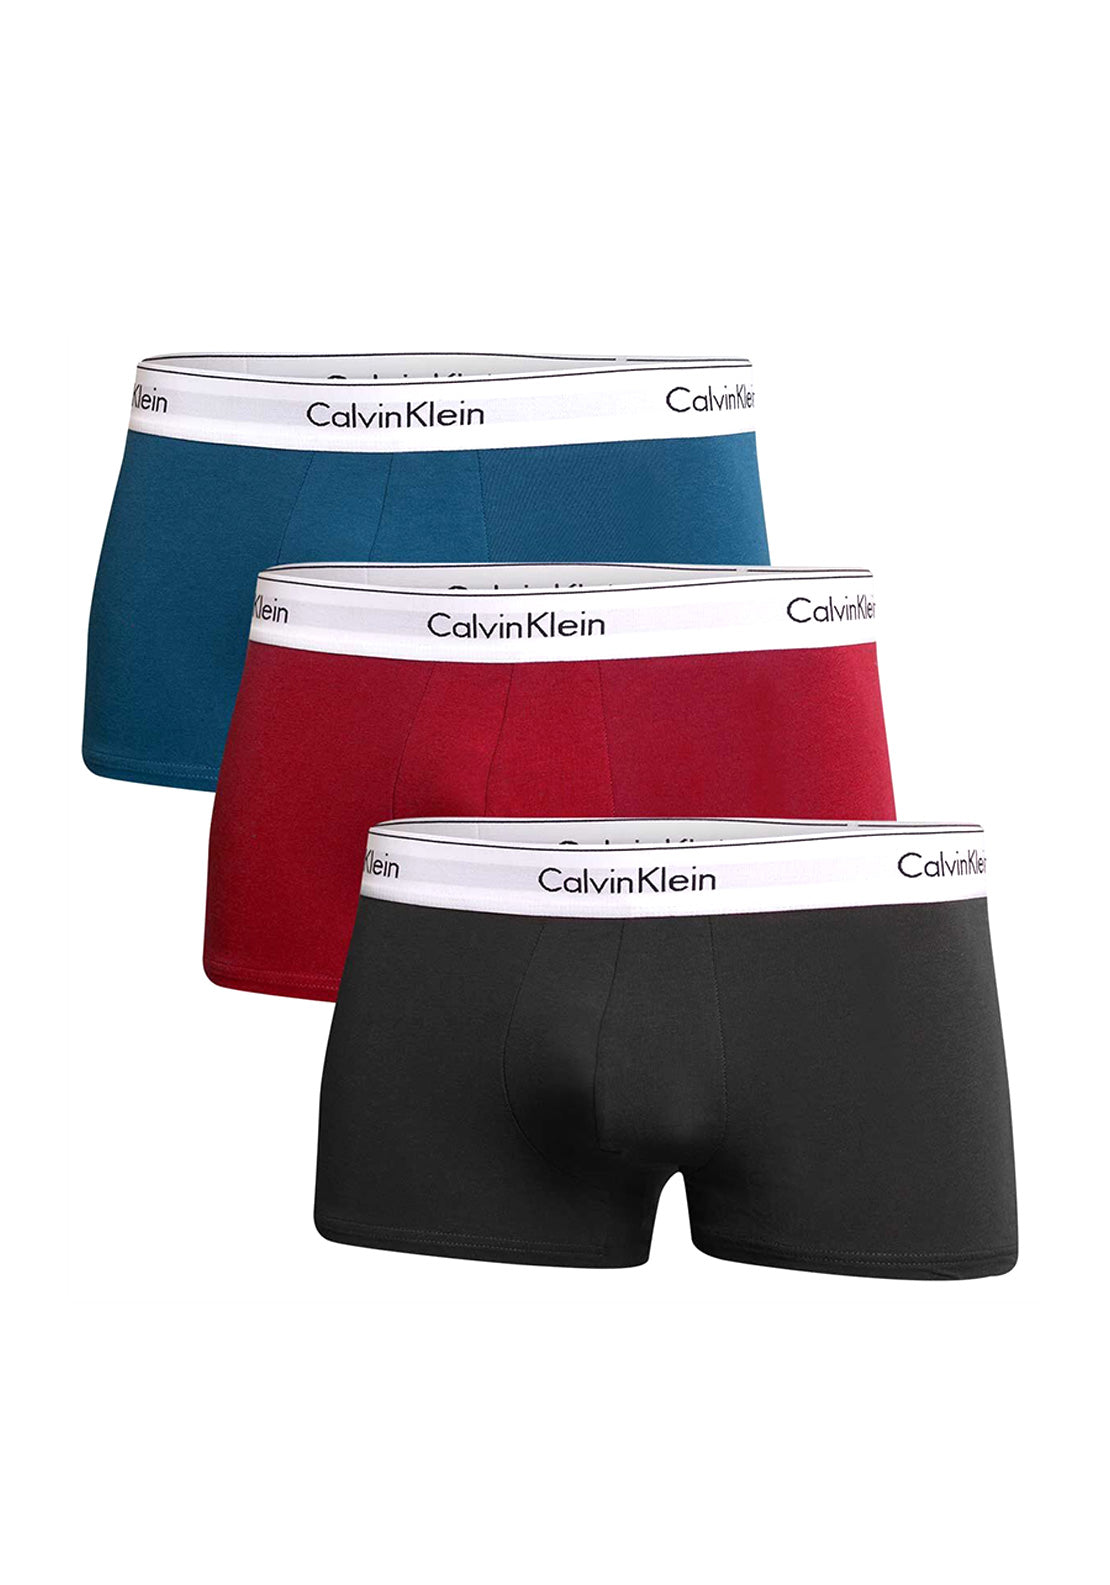 Calvin Klein Modern Cotton Stretch Trunks, Raspberry Blush Multi